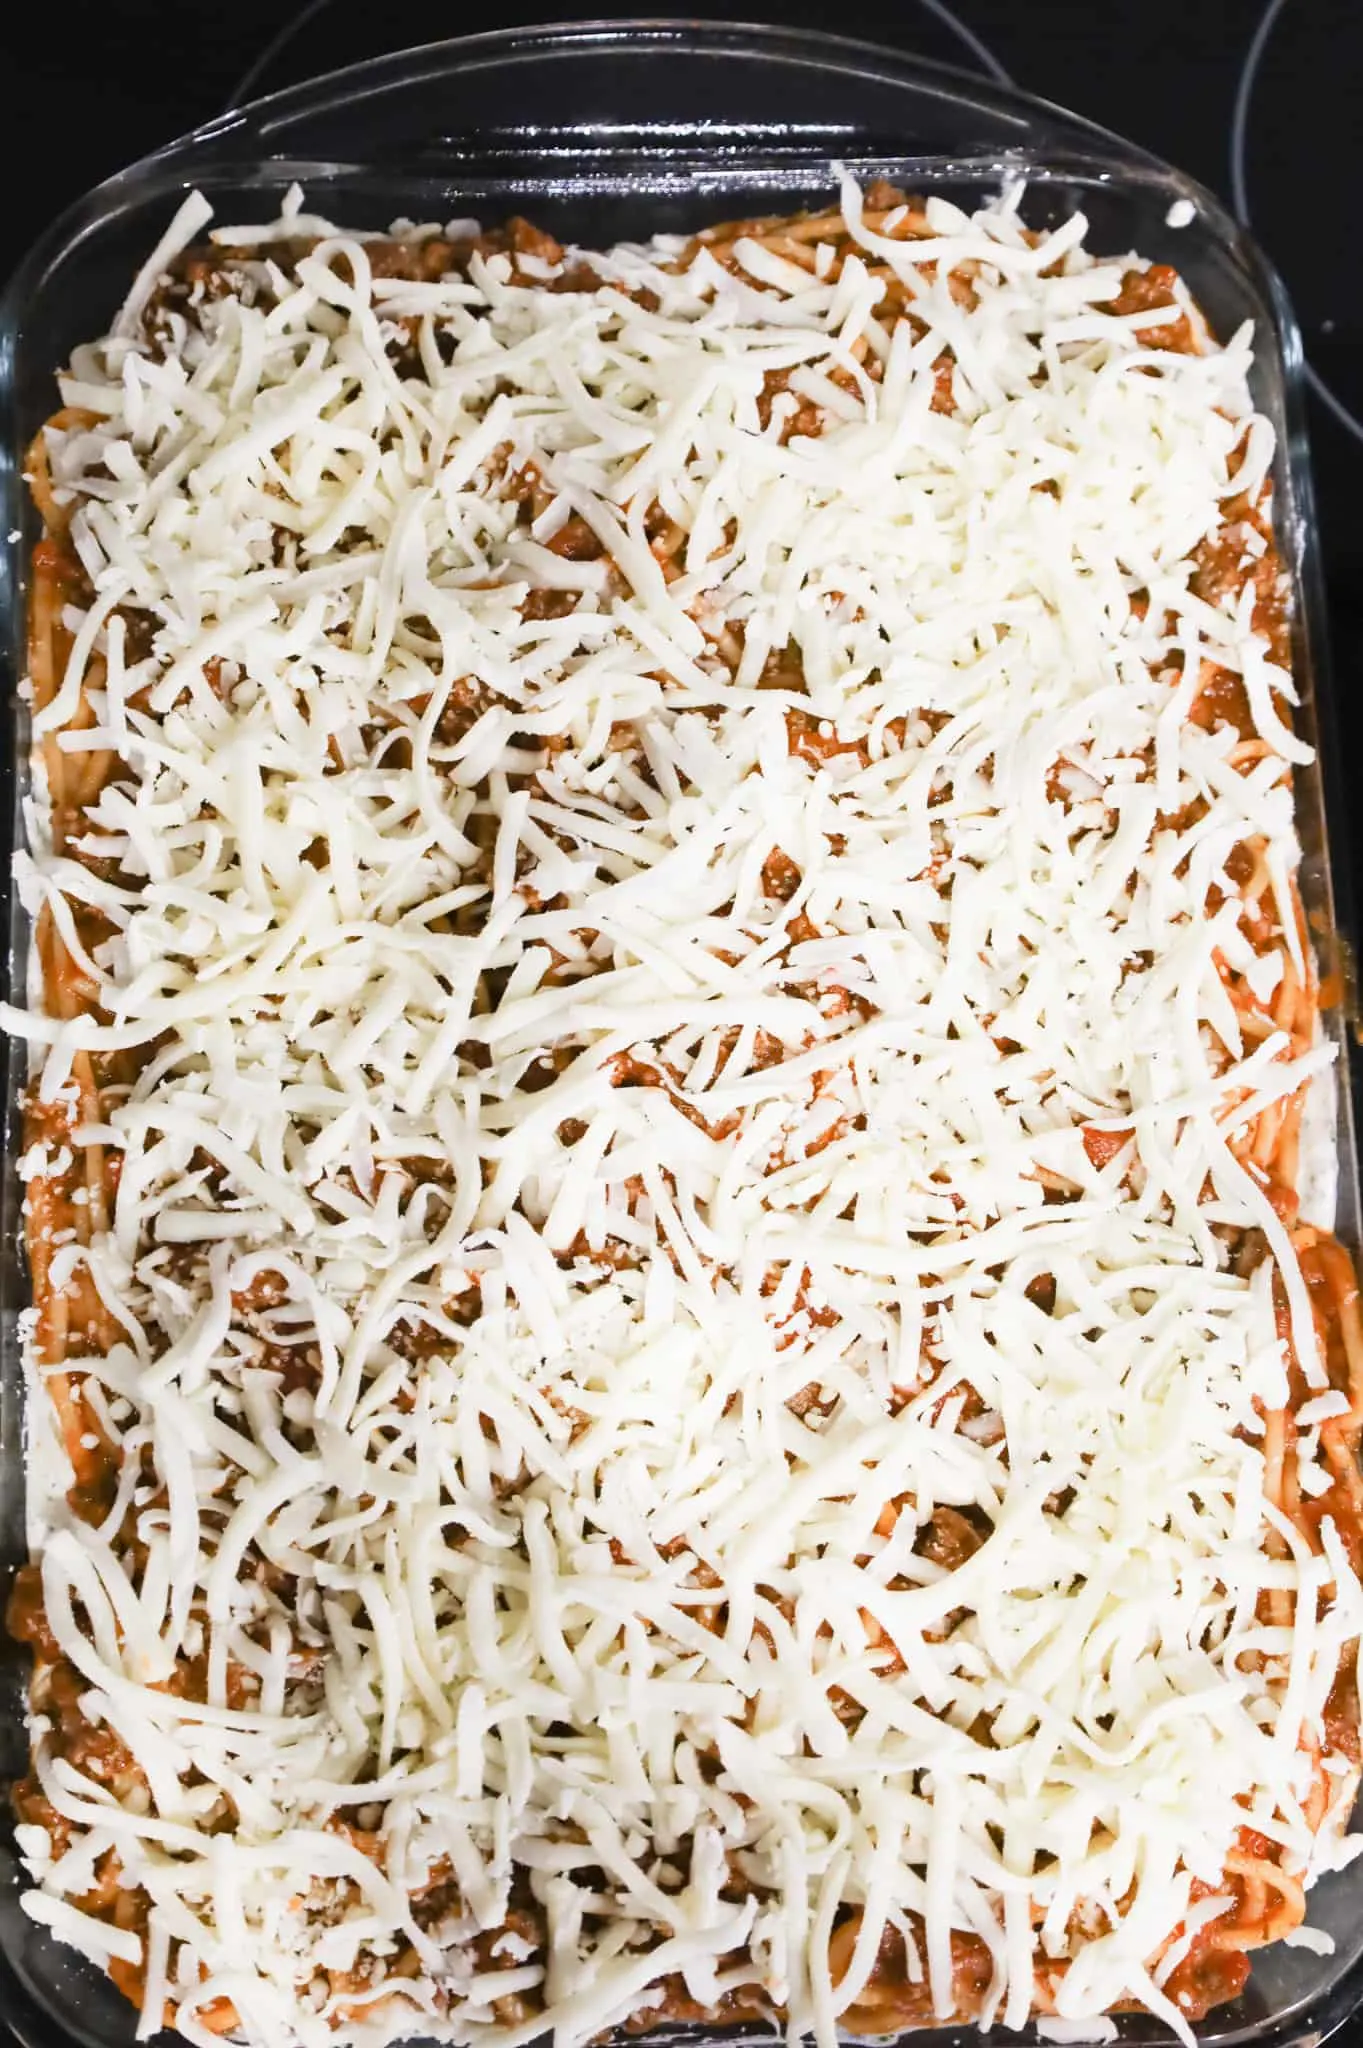 shredded mozzarella on top of spaghetti in a baking dish